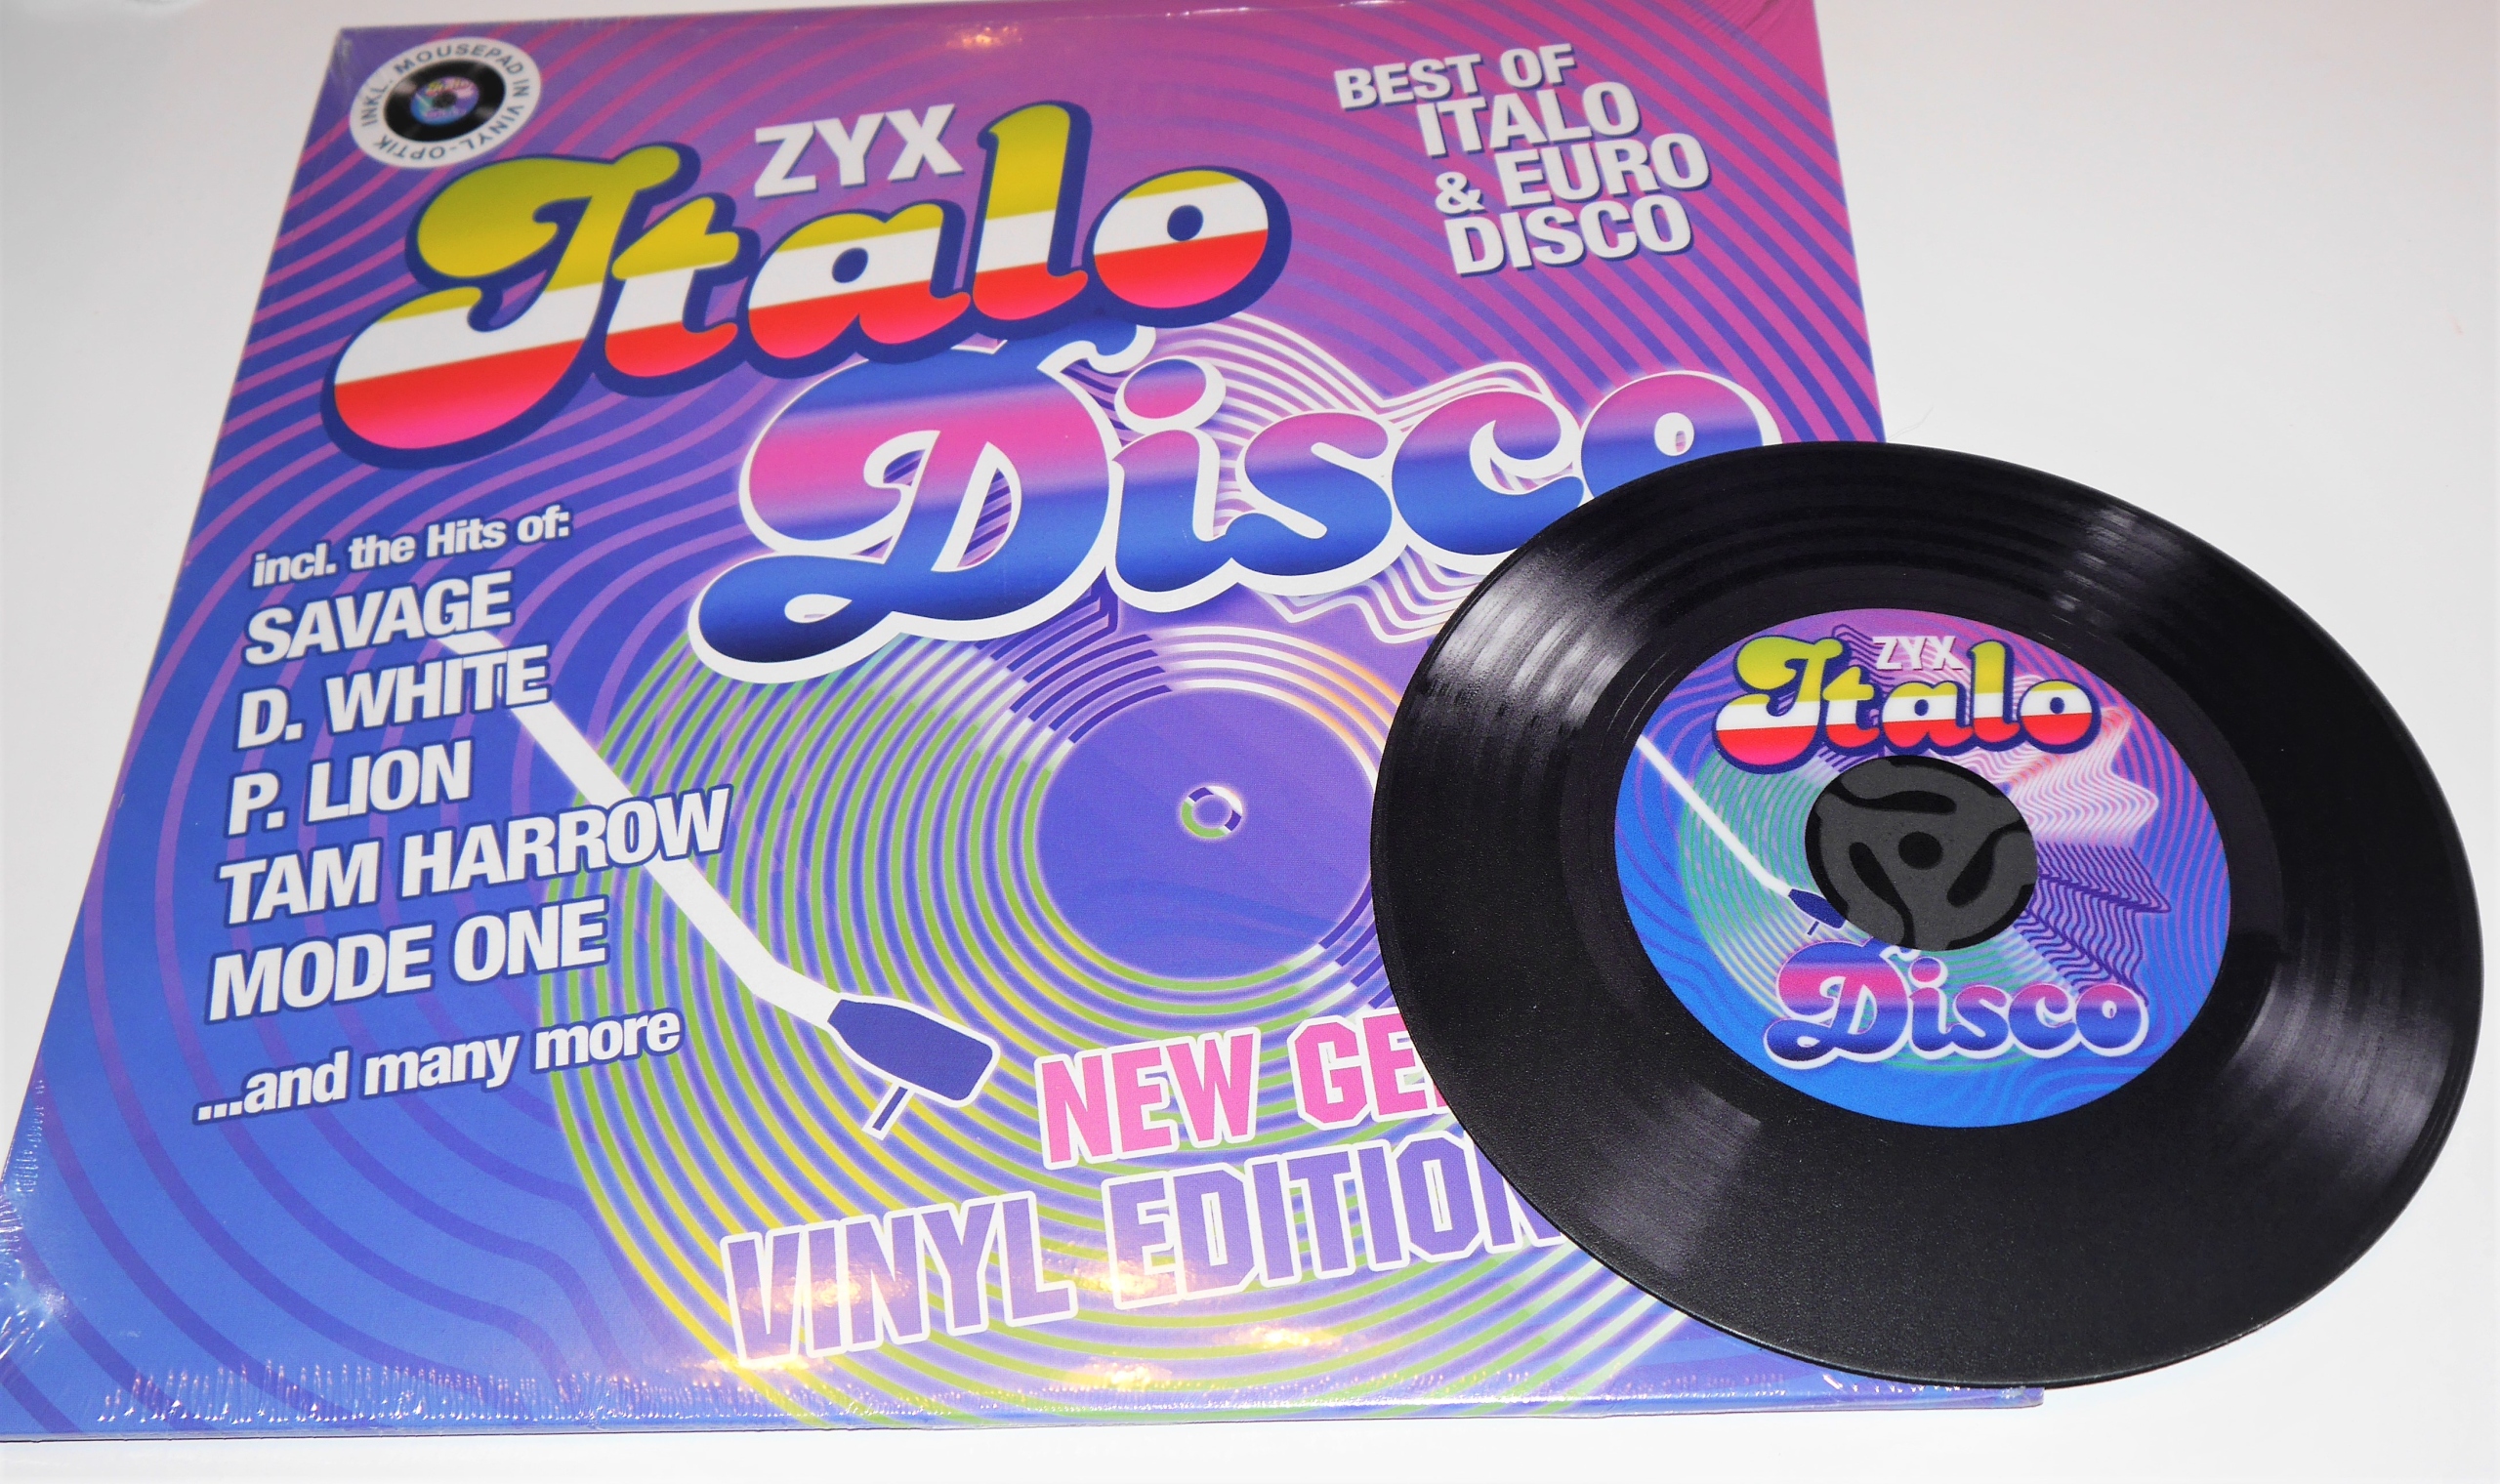 Zyx italo disco new generation 24. ZYX Italo Disco New Generation:Vinyl Edition Vol.2.